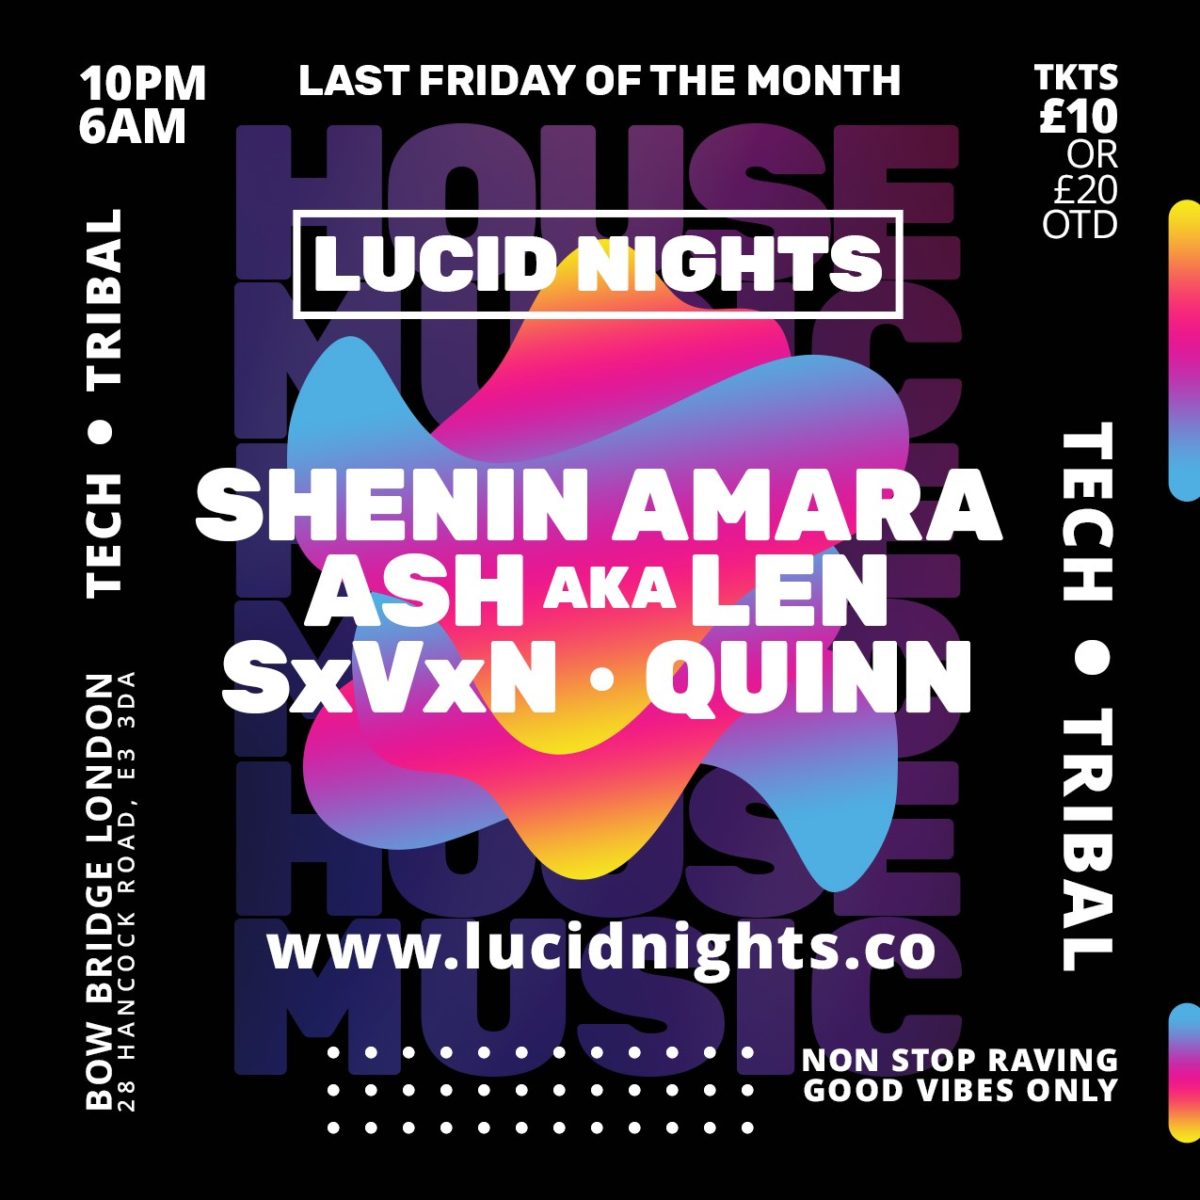 Lucid Nights event flyer